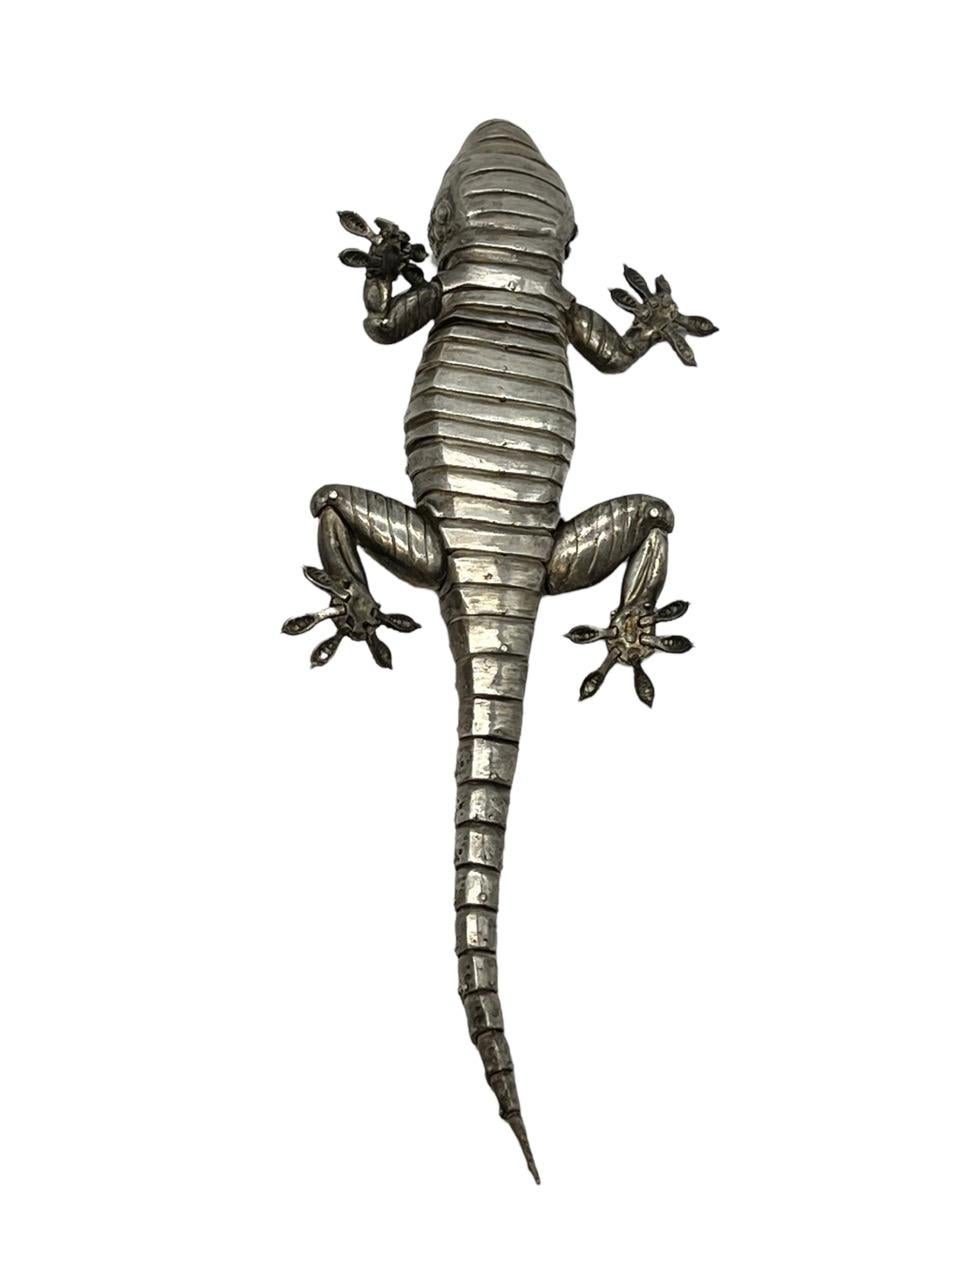 Oleg Konstantinov Fully Articulated Gecko Made of Sterling Silver For Sale 7